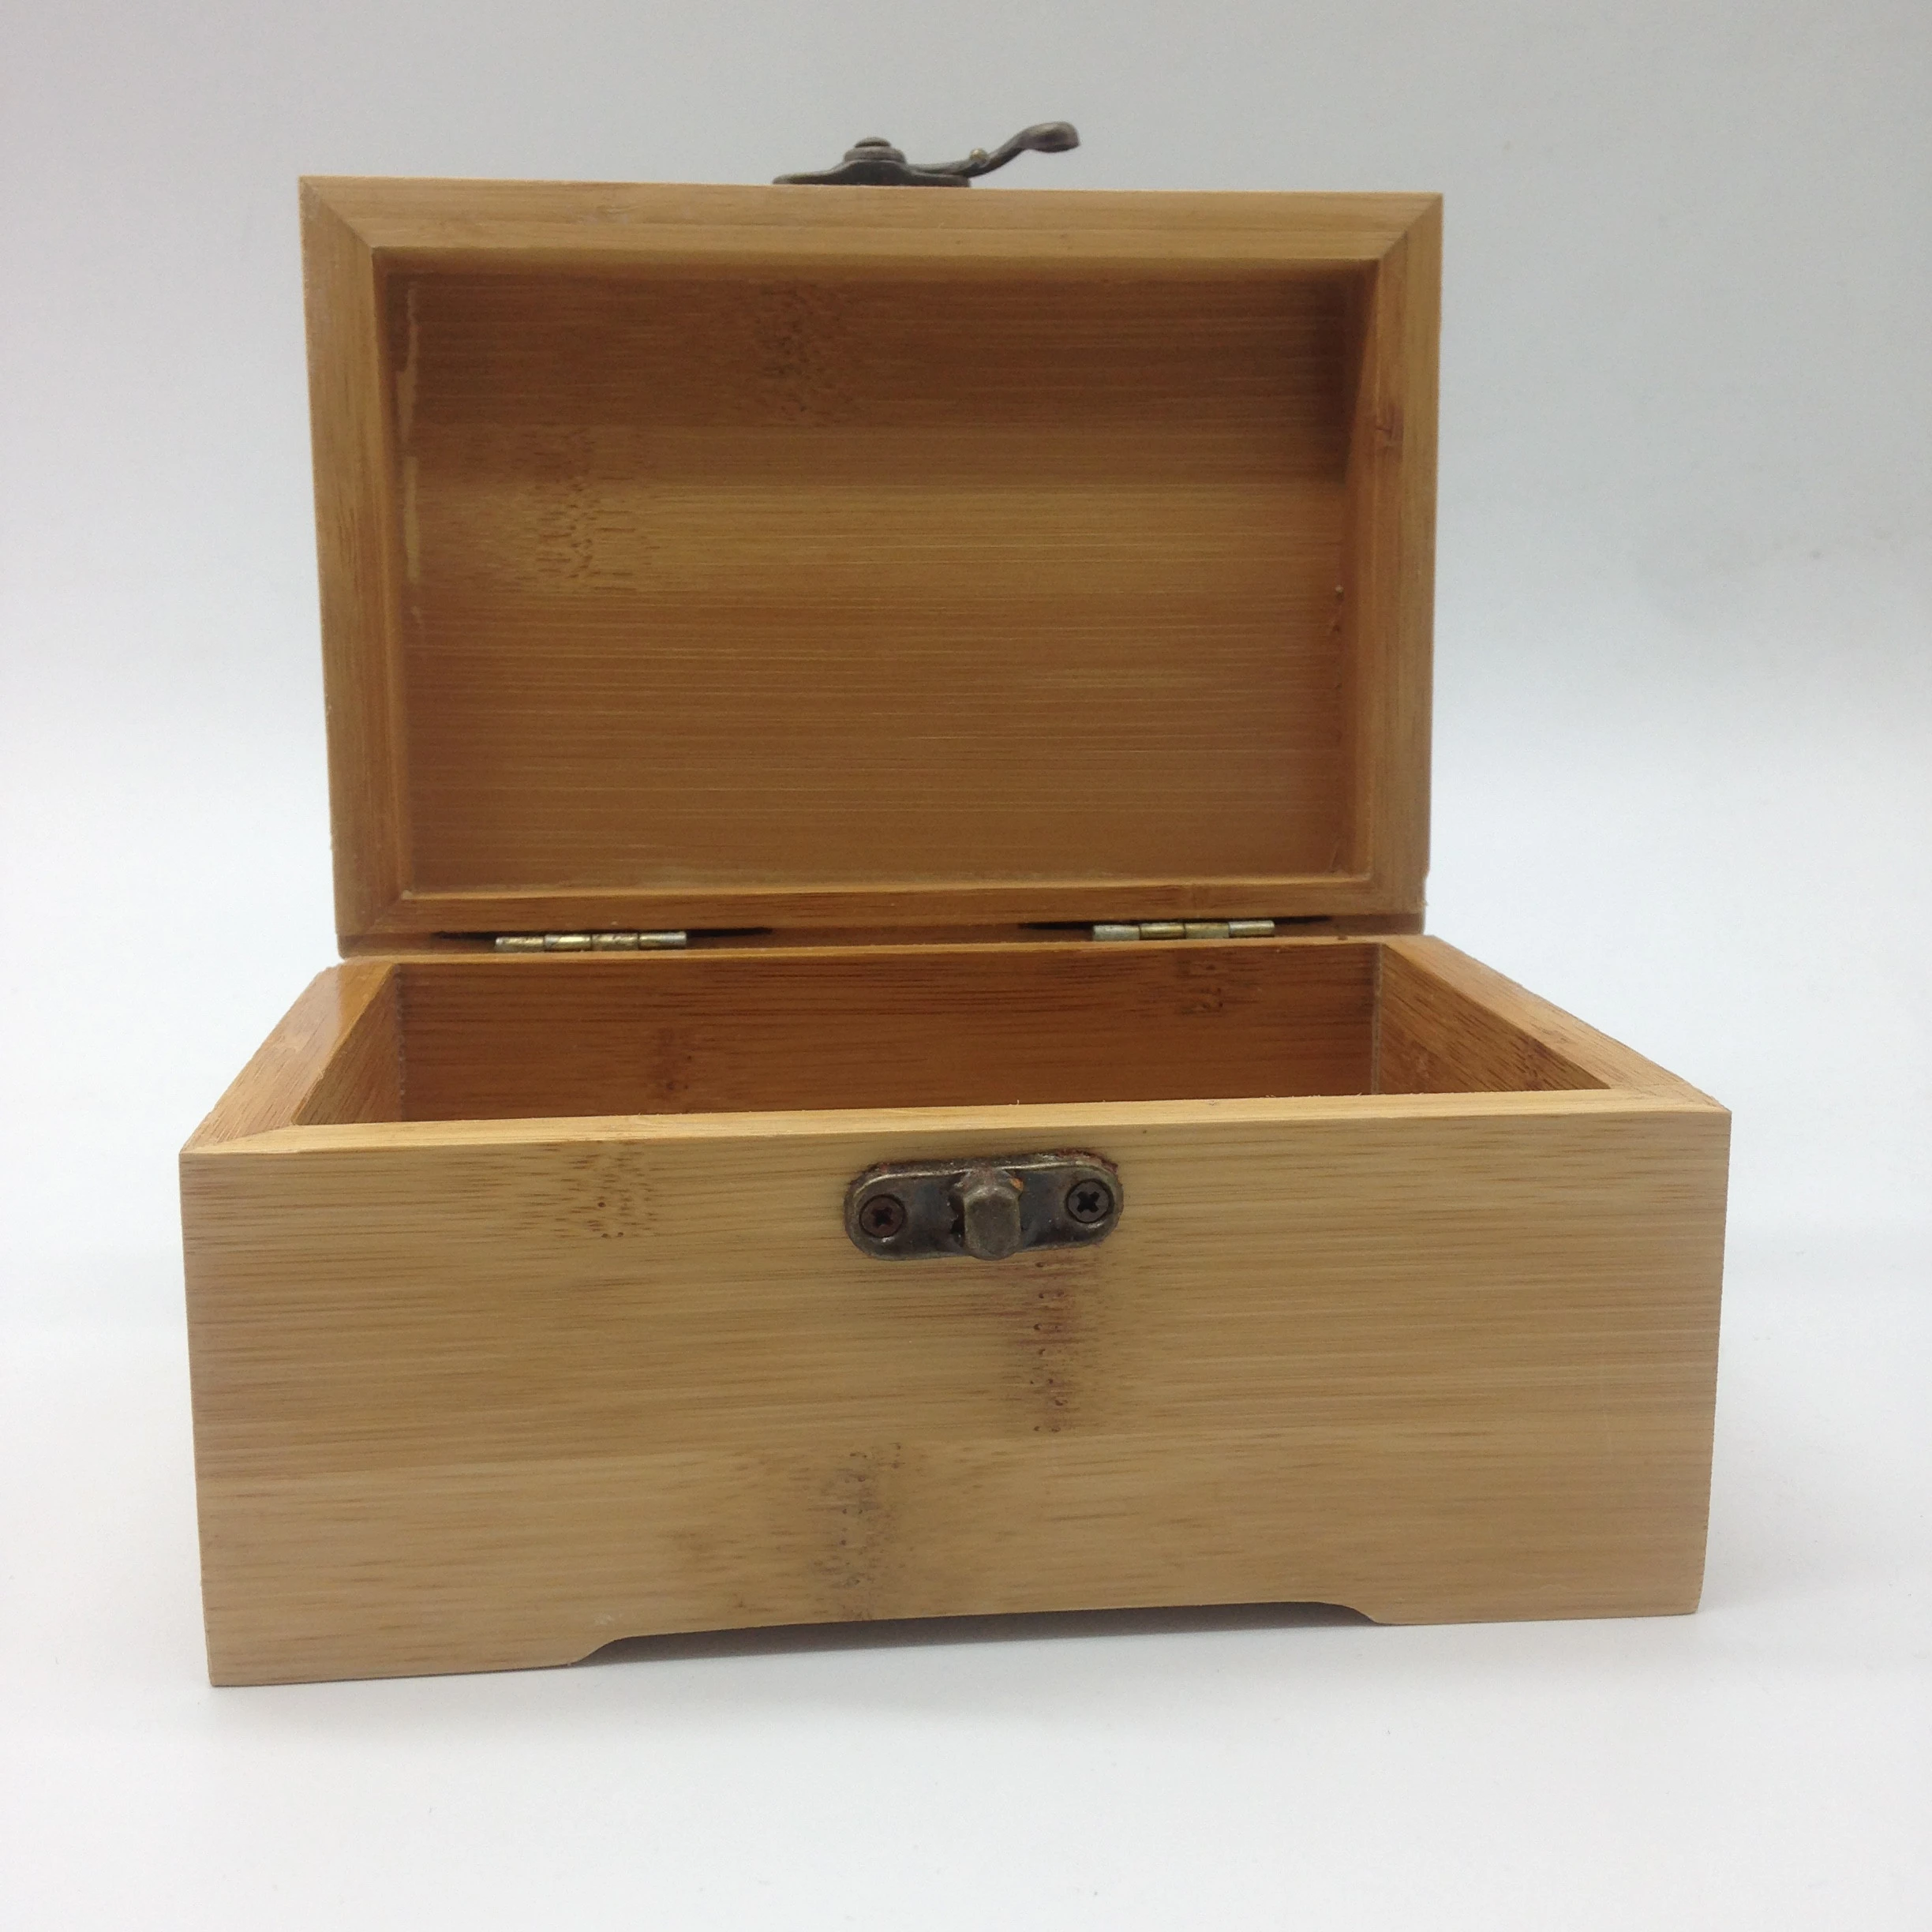 Eco friendly Custom Paper Packaging Wood Bamboo Printed Cosmetic Storage Box